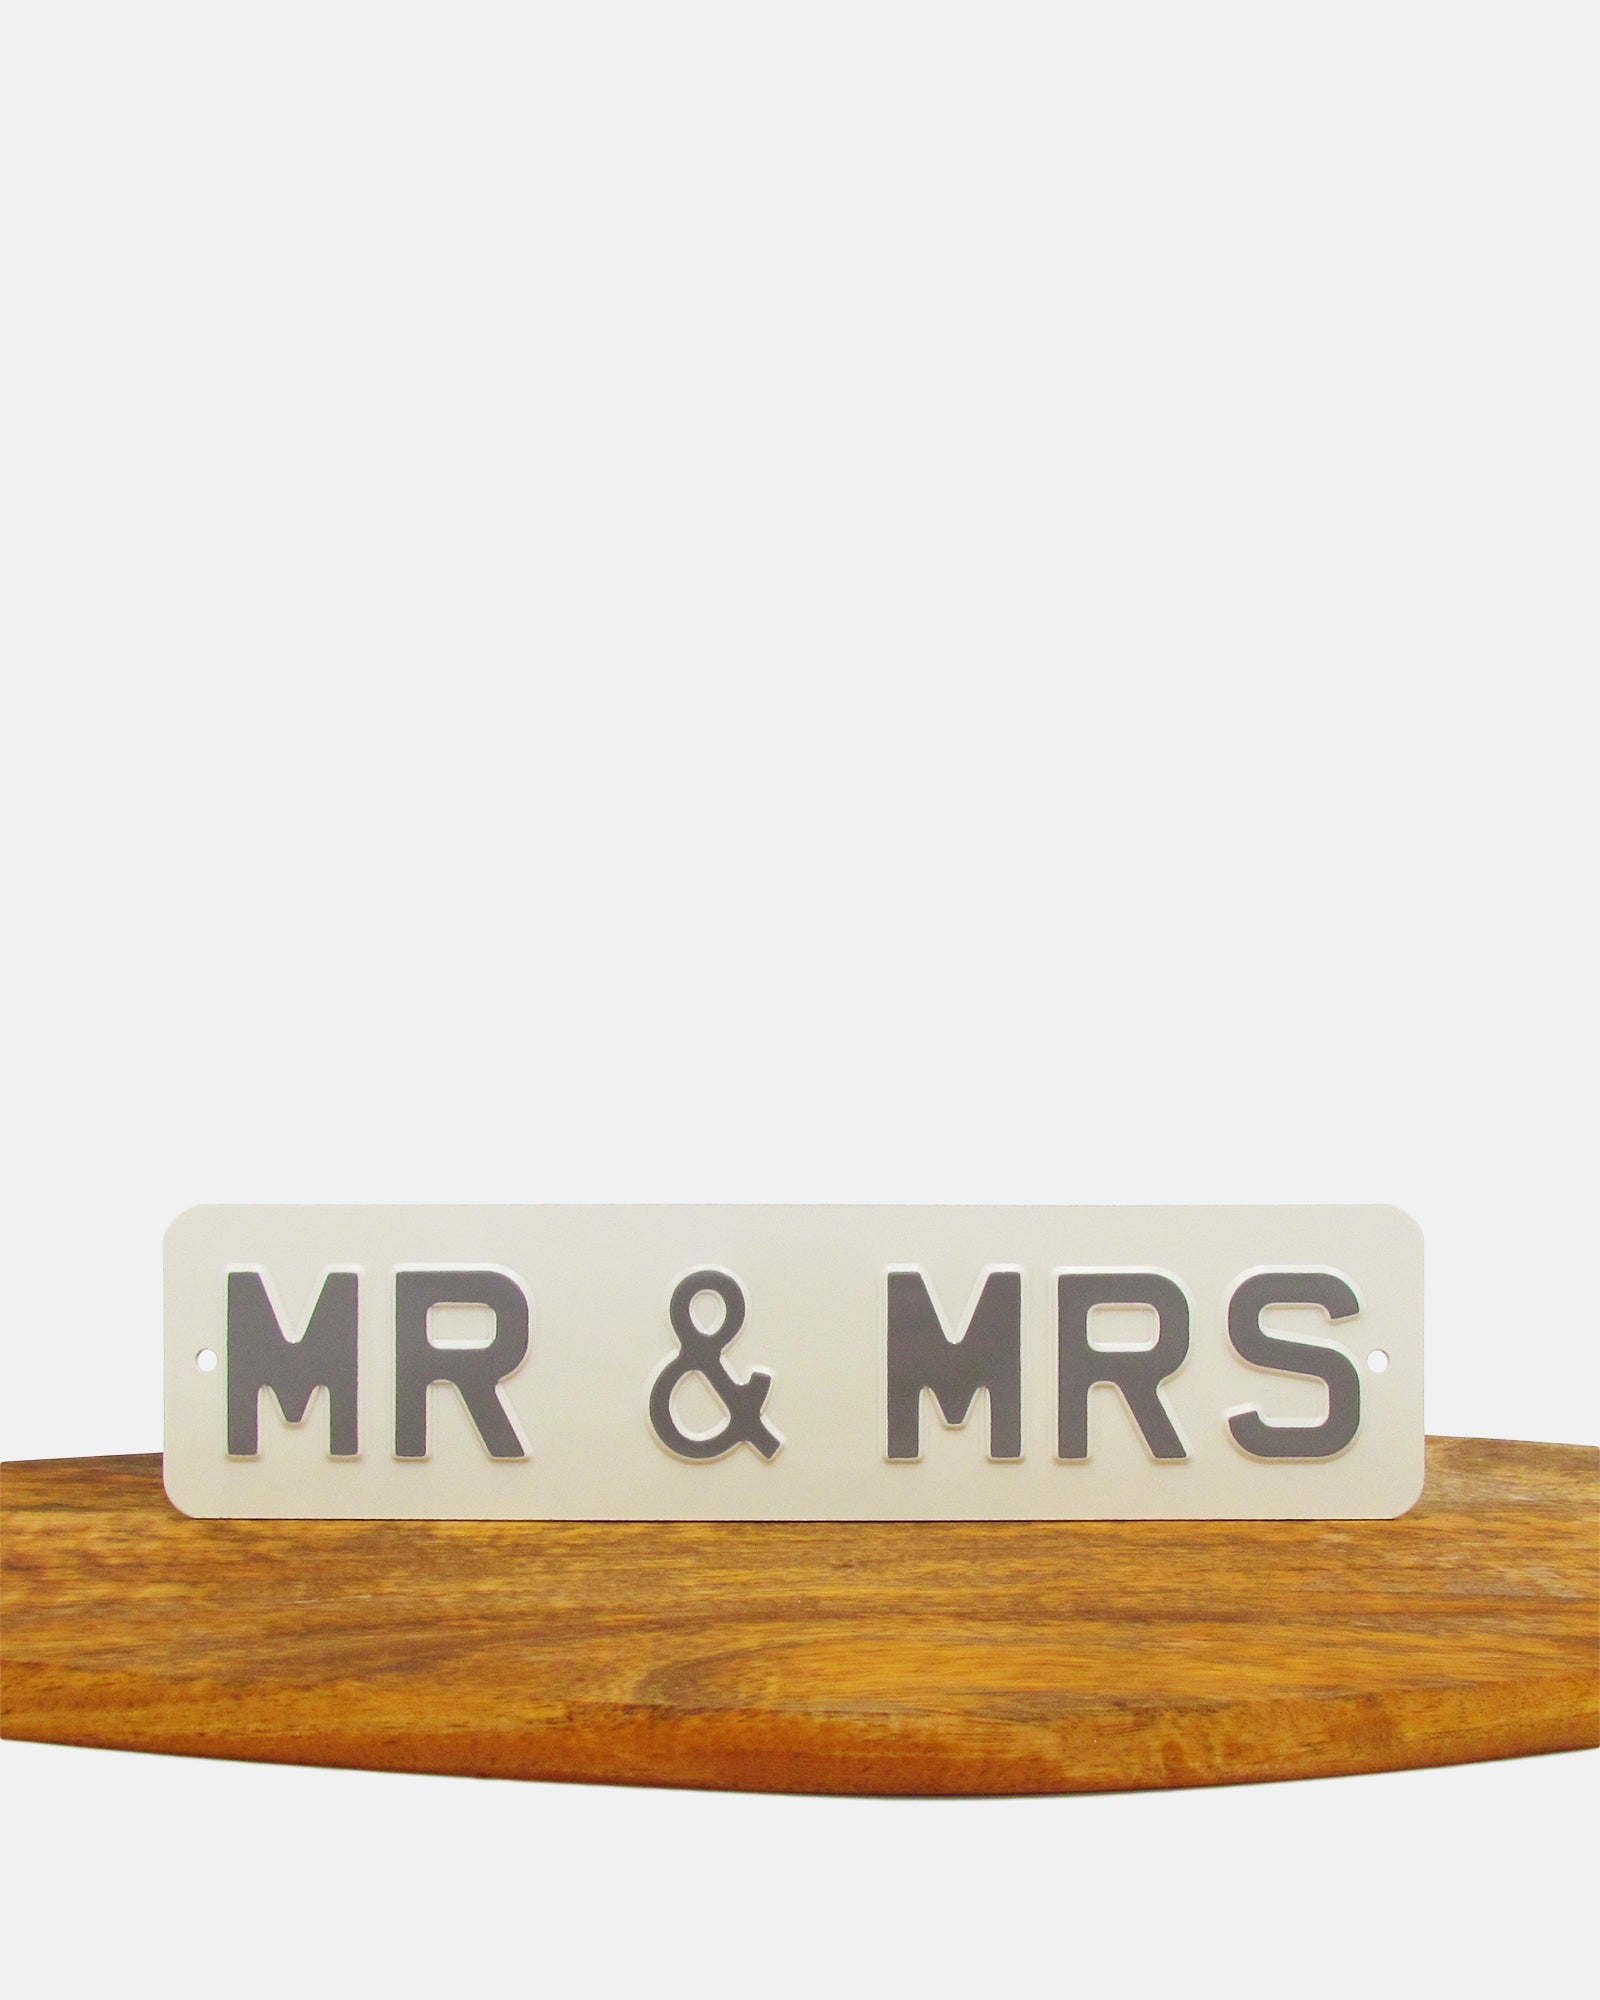 MR & MRS Enamel Sign - BRIT LOCKER